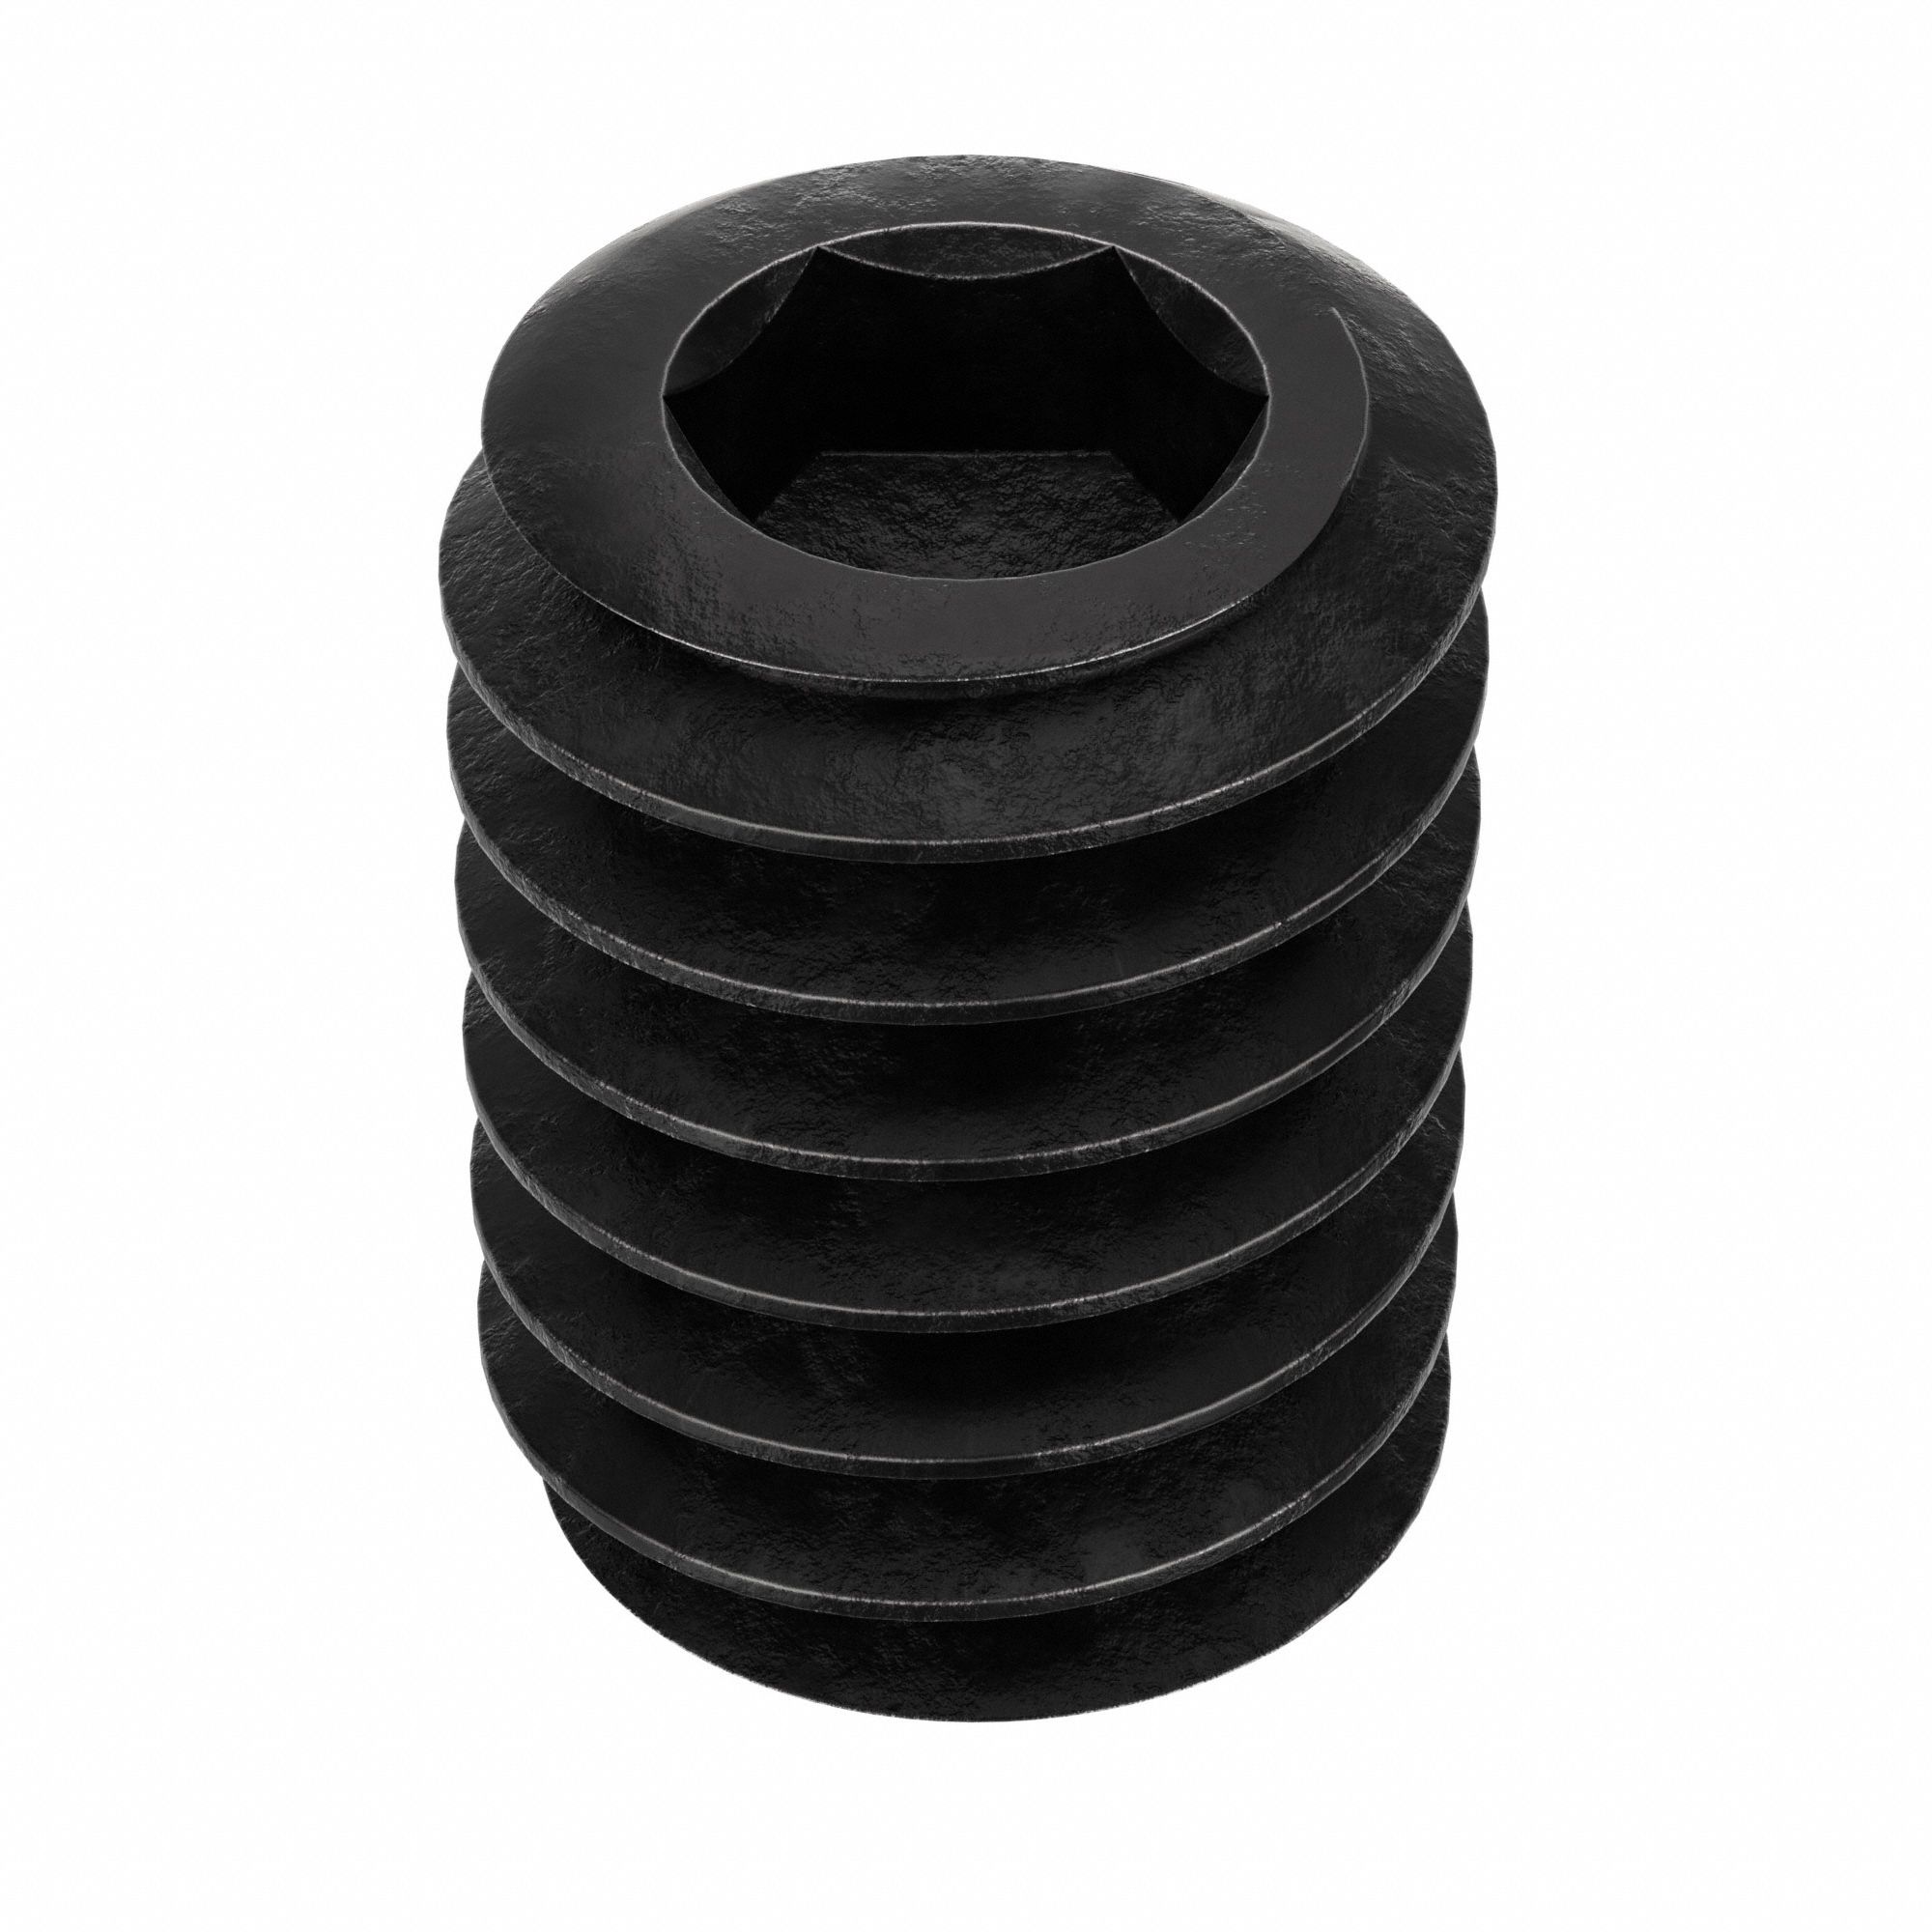 Socket SET / GRUB SCREWS Cup Point Black Alloy Steel #4-48 x 1/8" Qty 20 